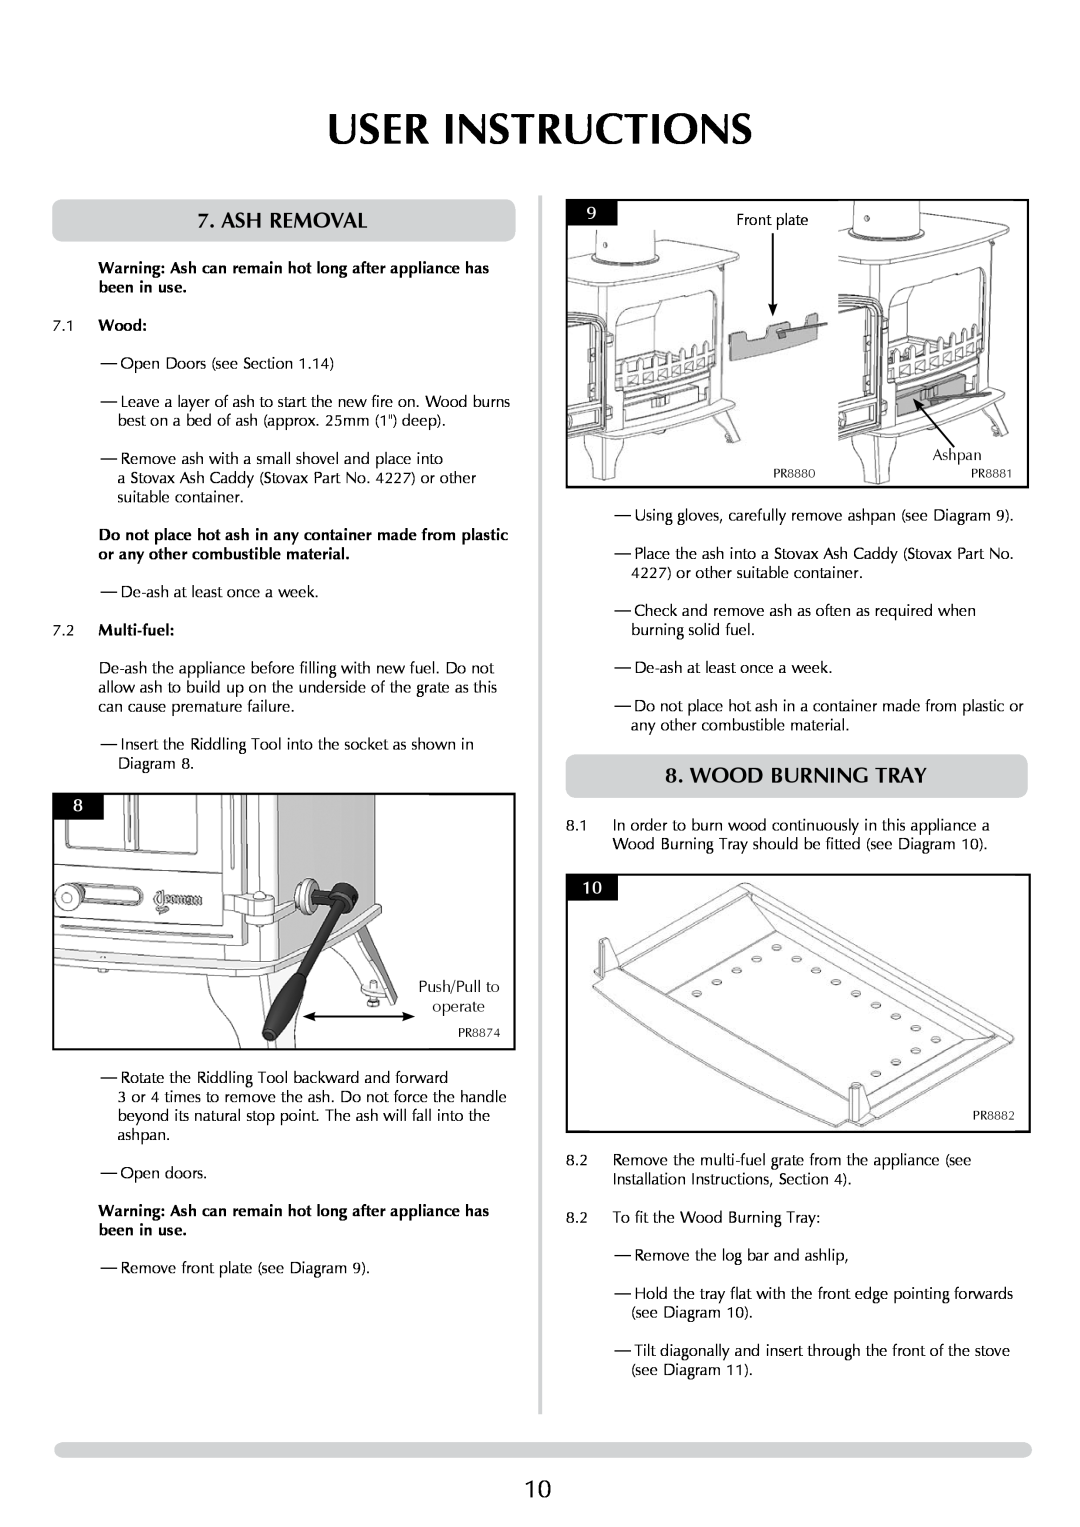 Yeoman DEVON 50 manual Ash Removal, Wood burning tray, User Instructions 